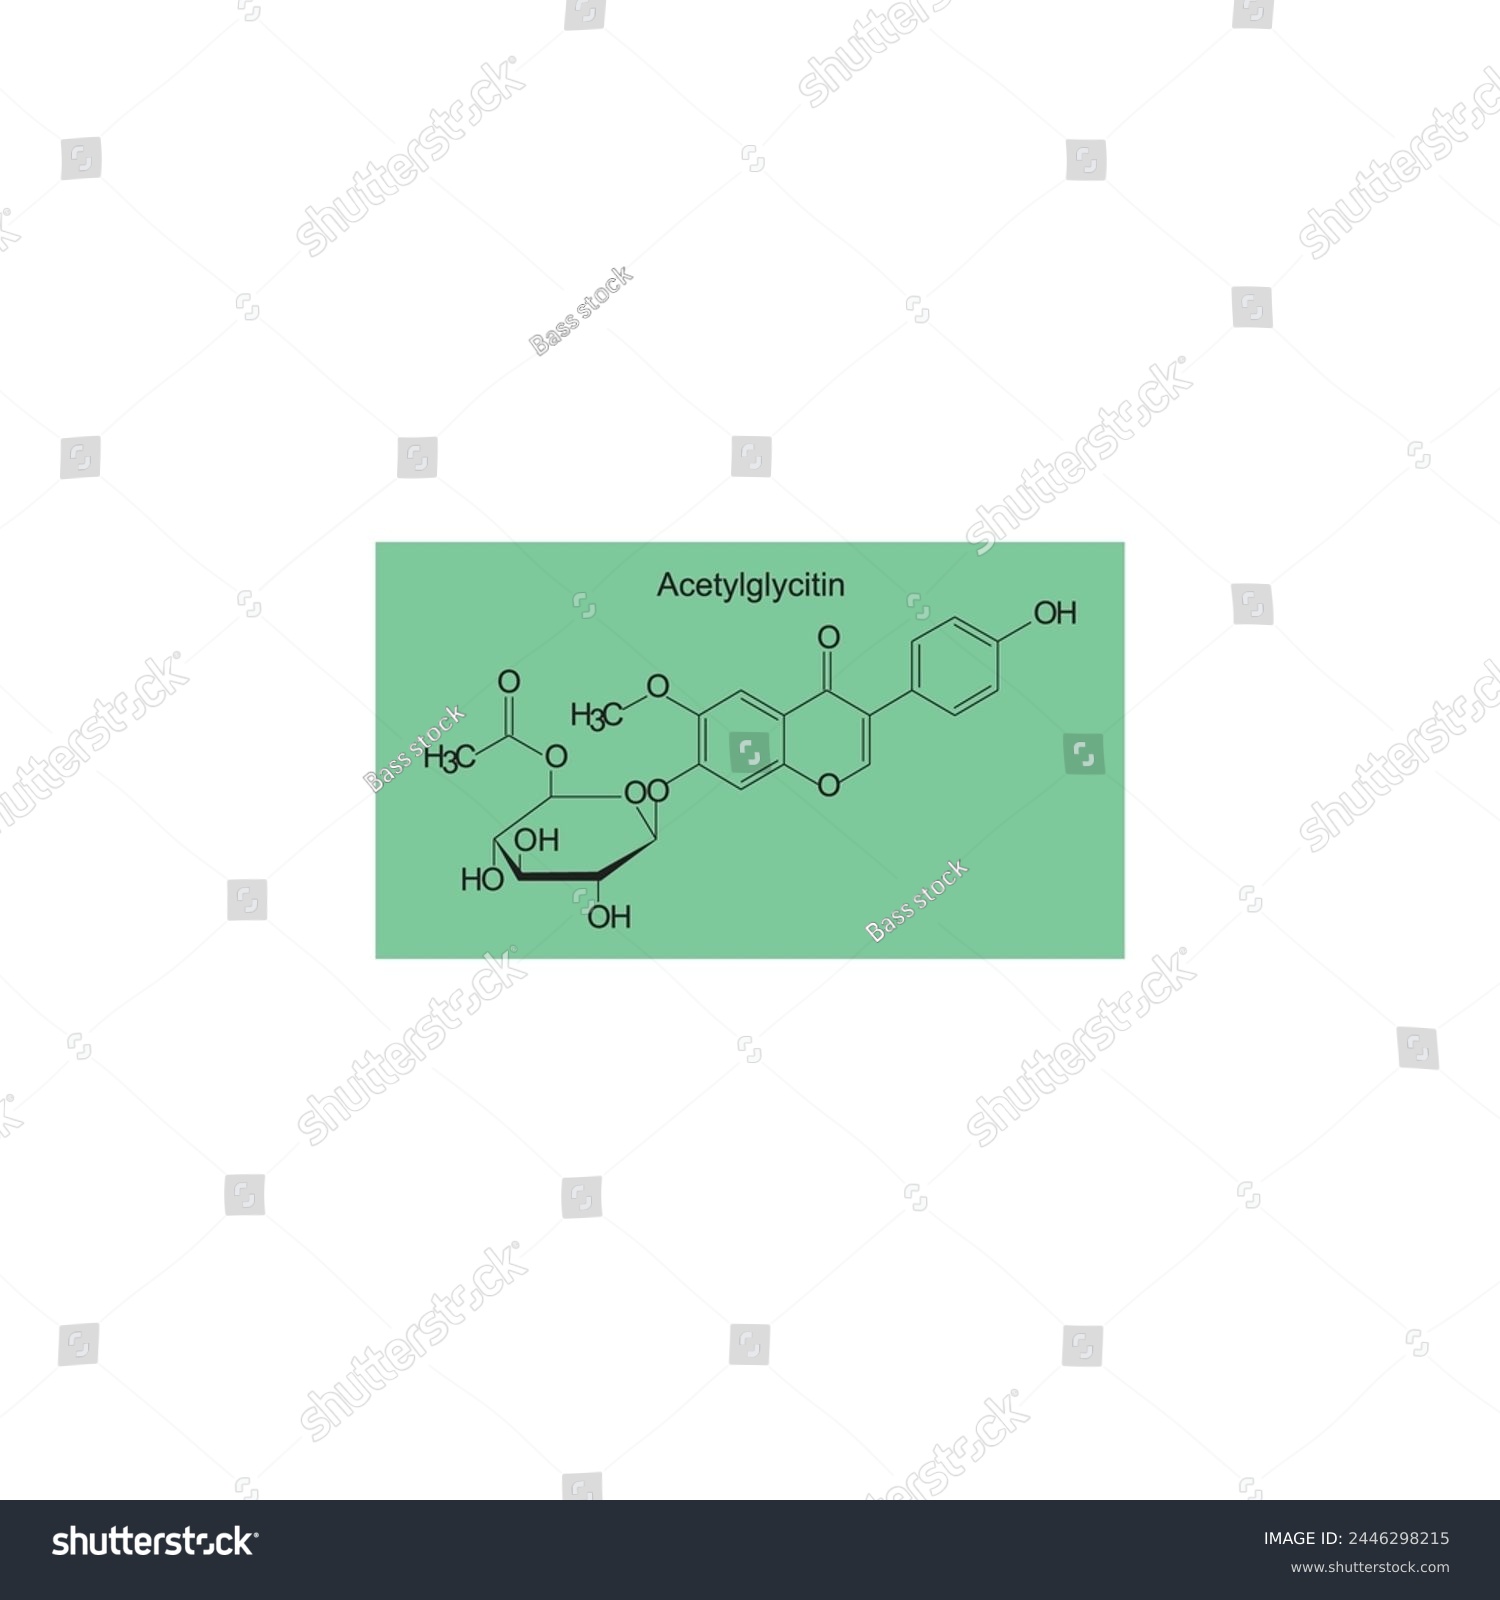 SVG of Acetylglycitin skeletal structure diagram.Isoflavanone compound molecule scientific illustration on green background. svg